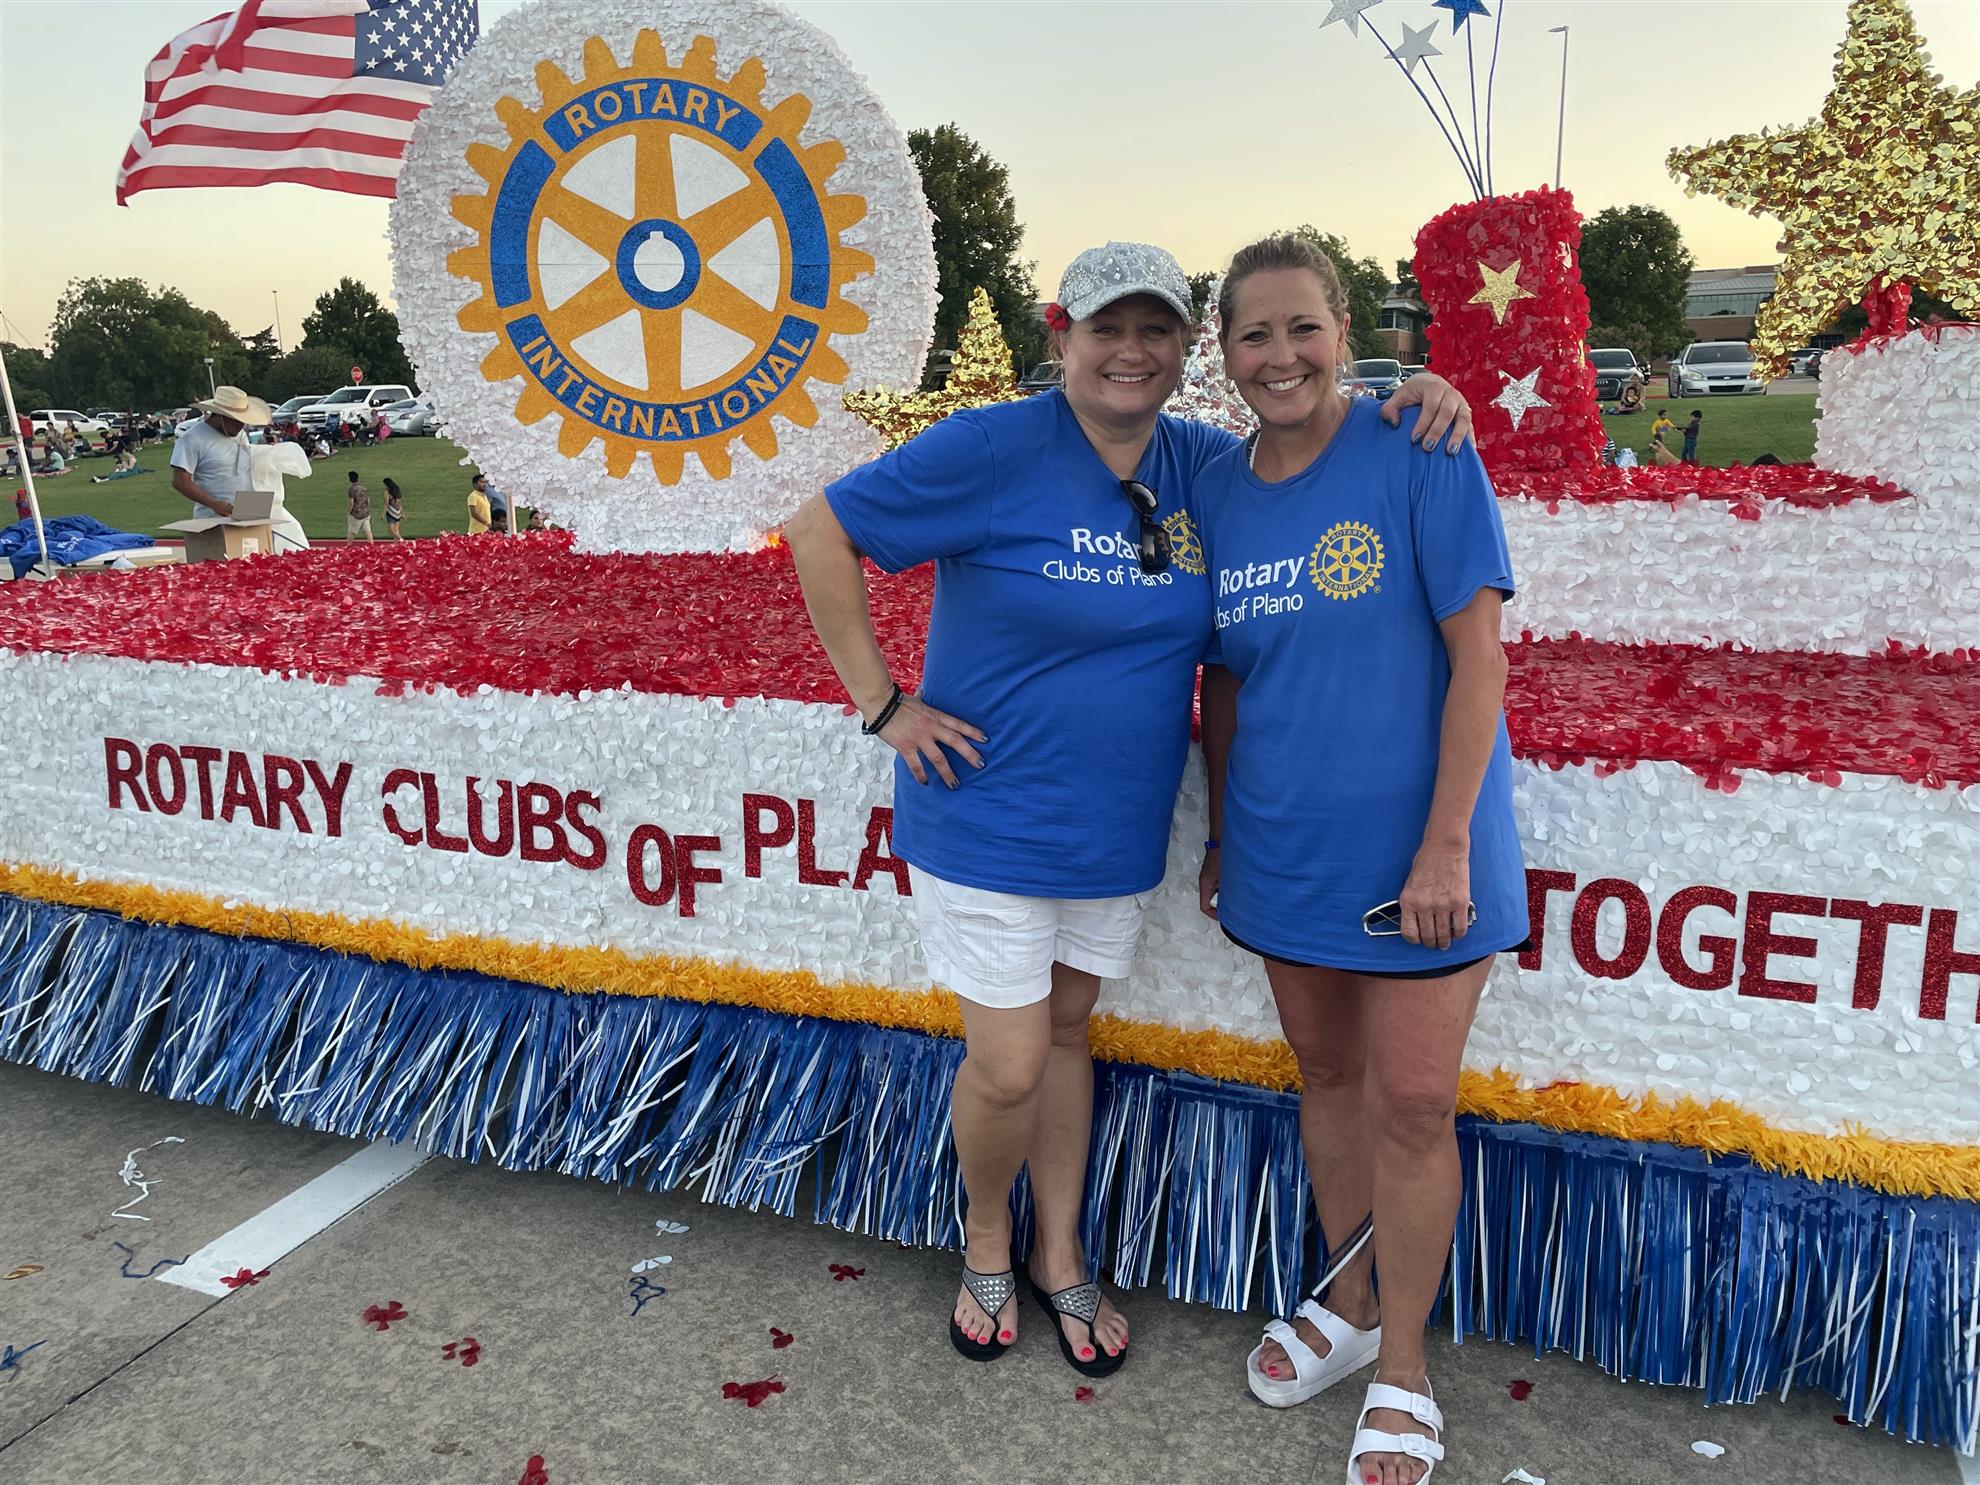 July 4th Plano Parade Rotary Club of North Texas Pioneers